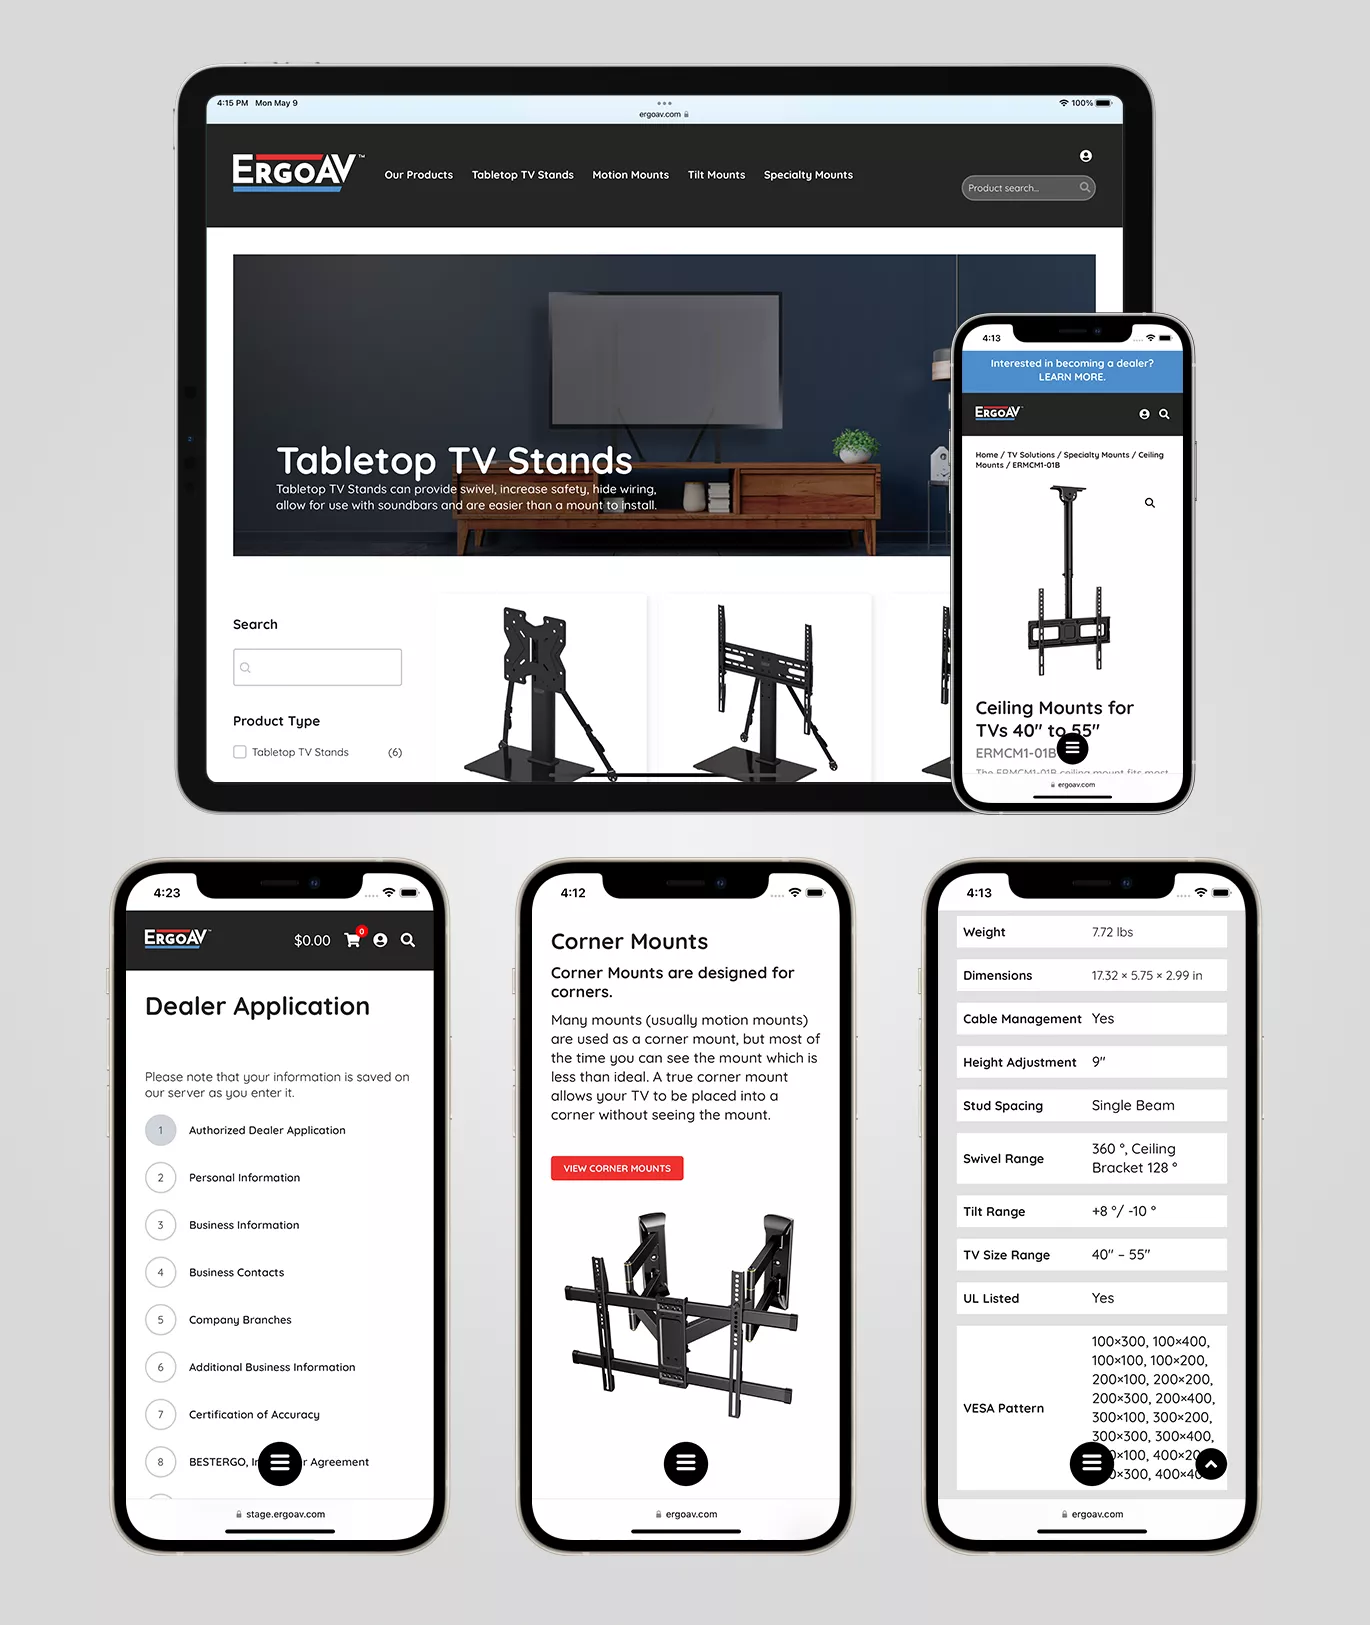 ergoav.com website shown in tablet and mobile form